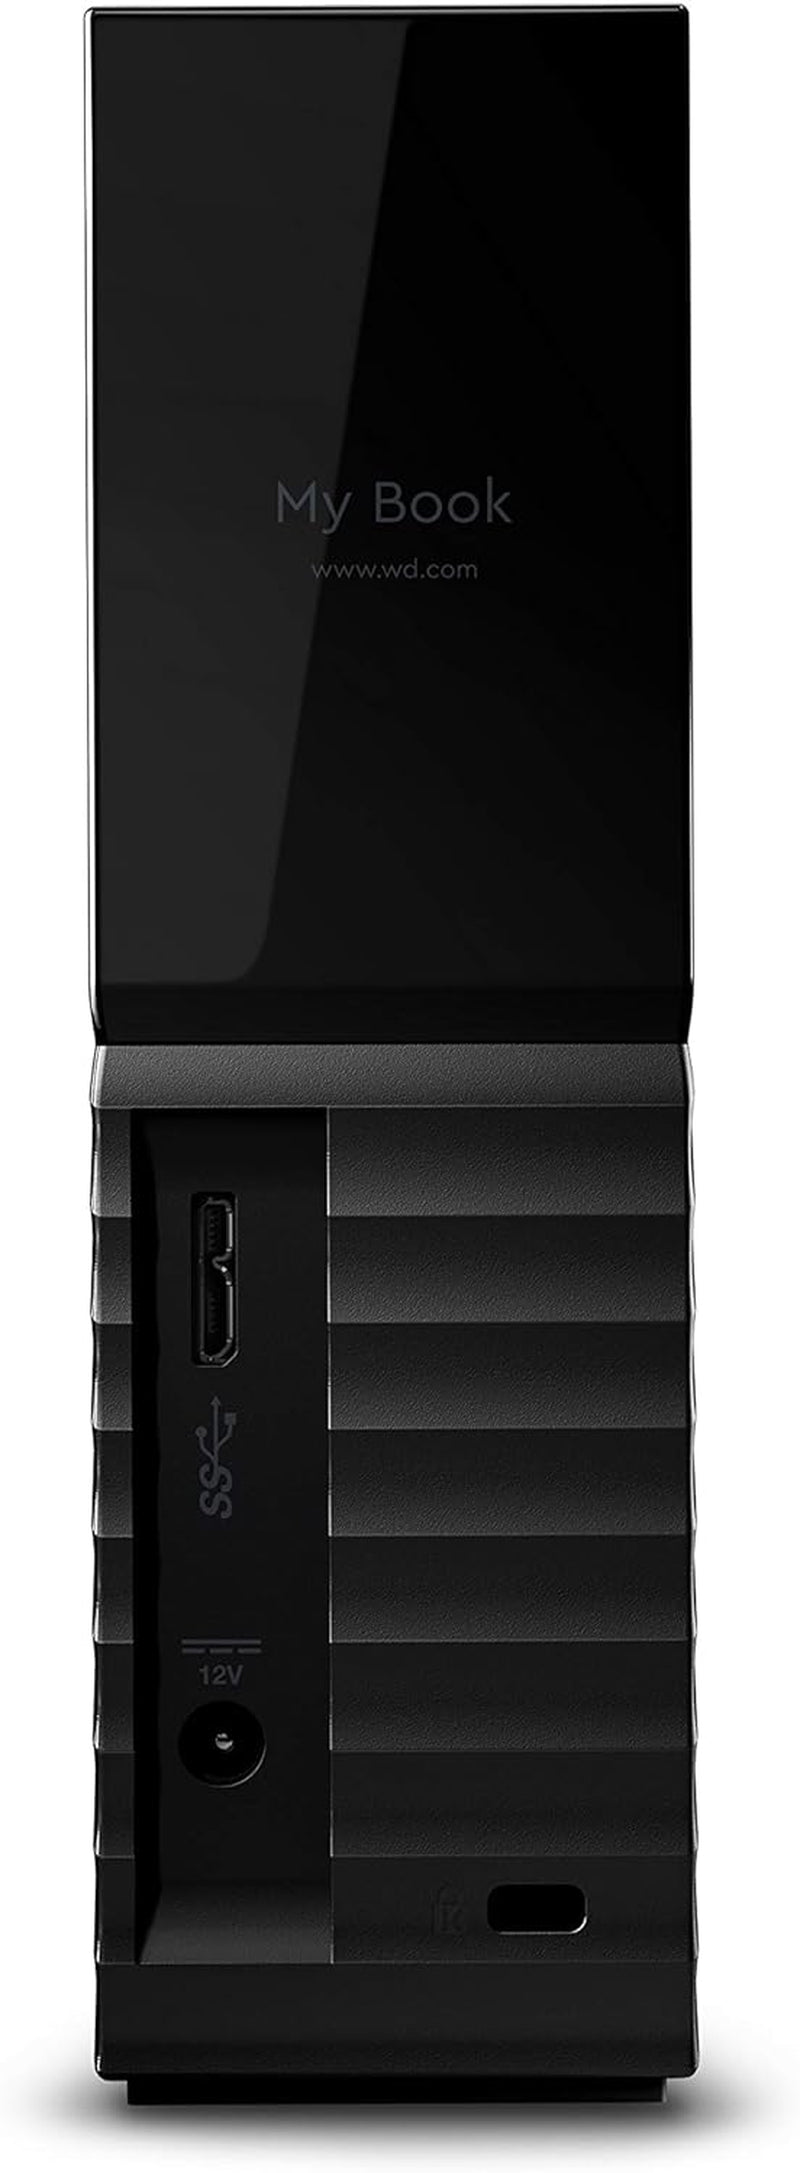 14TB My Book Desktop External Hard Drive, USB 3.0 - bbgb0140Hbk-Nesn,Black 14TB Single Drive Hard Drive